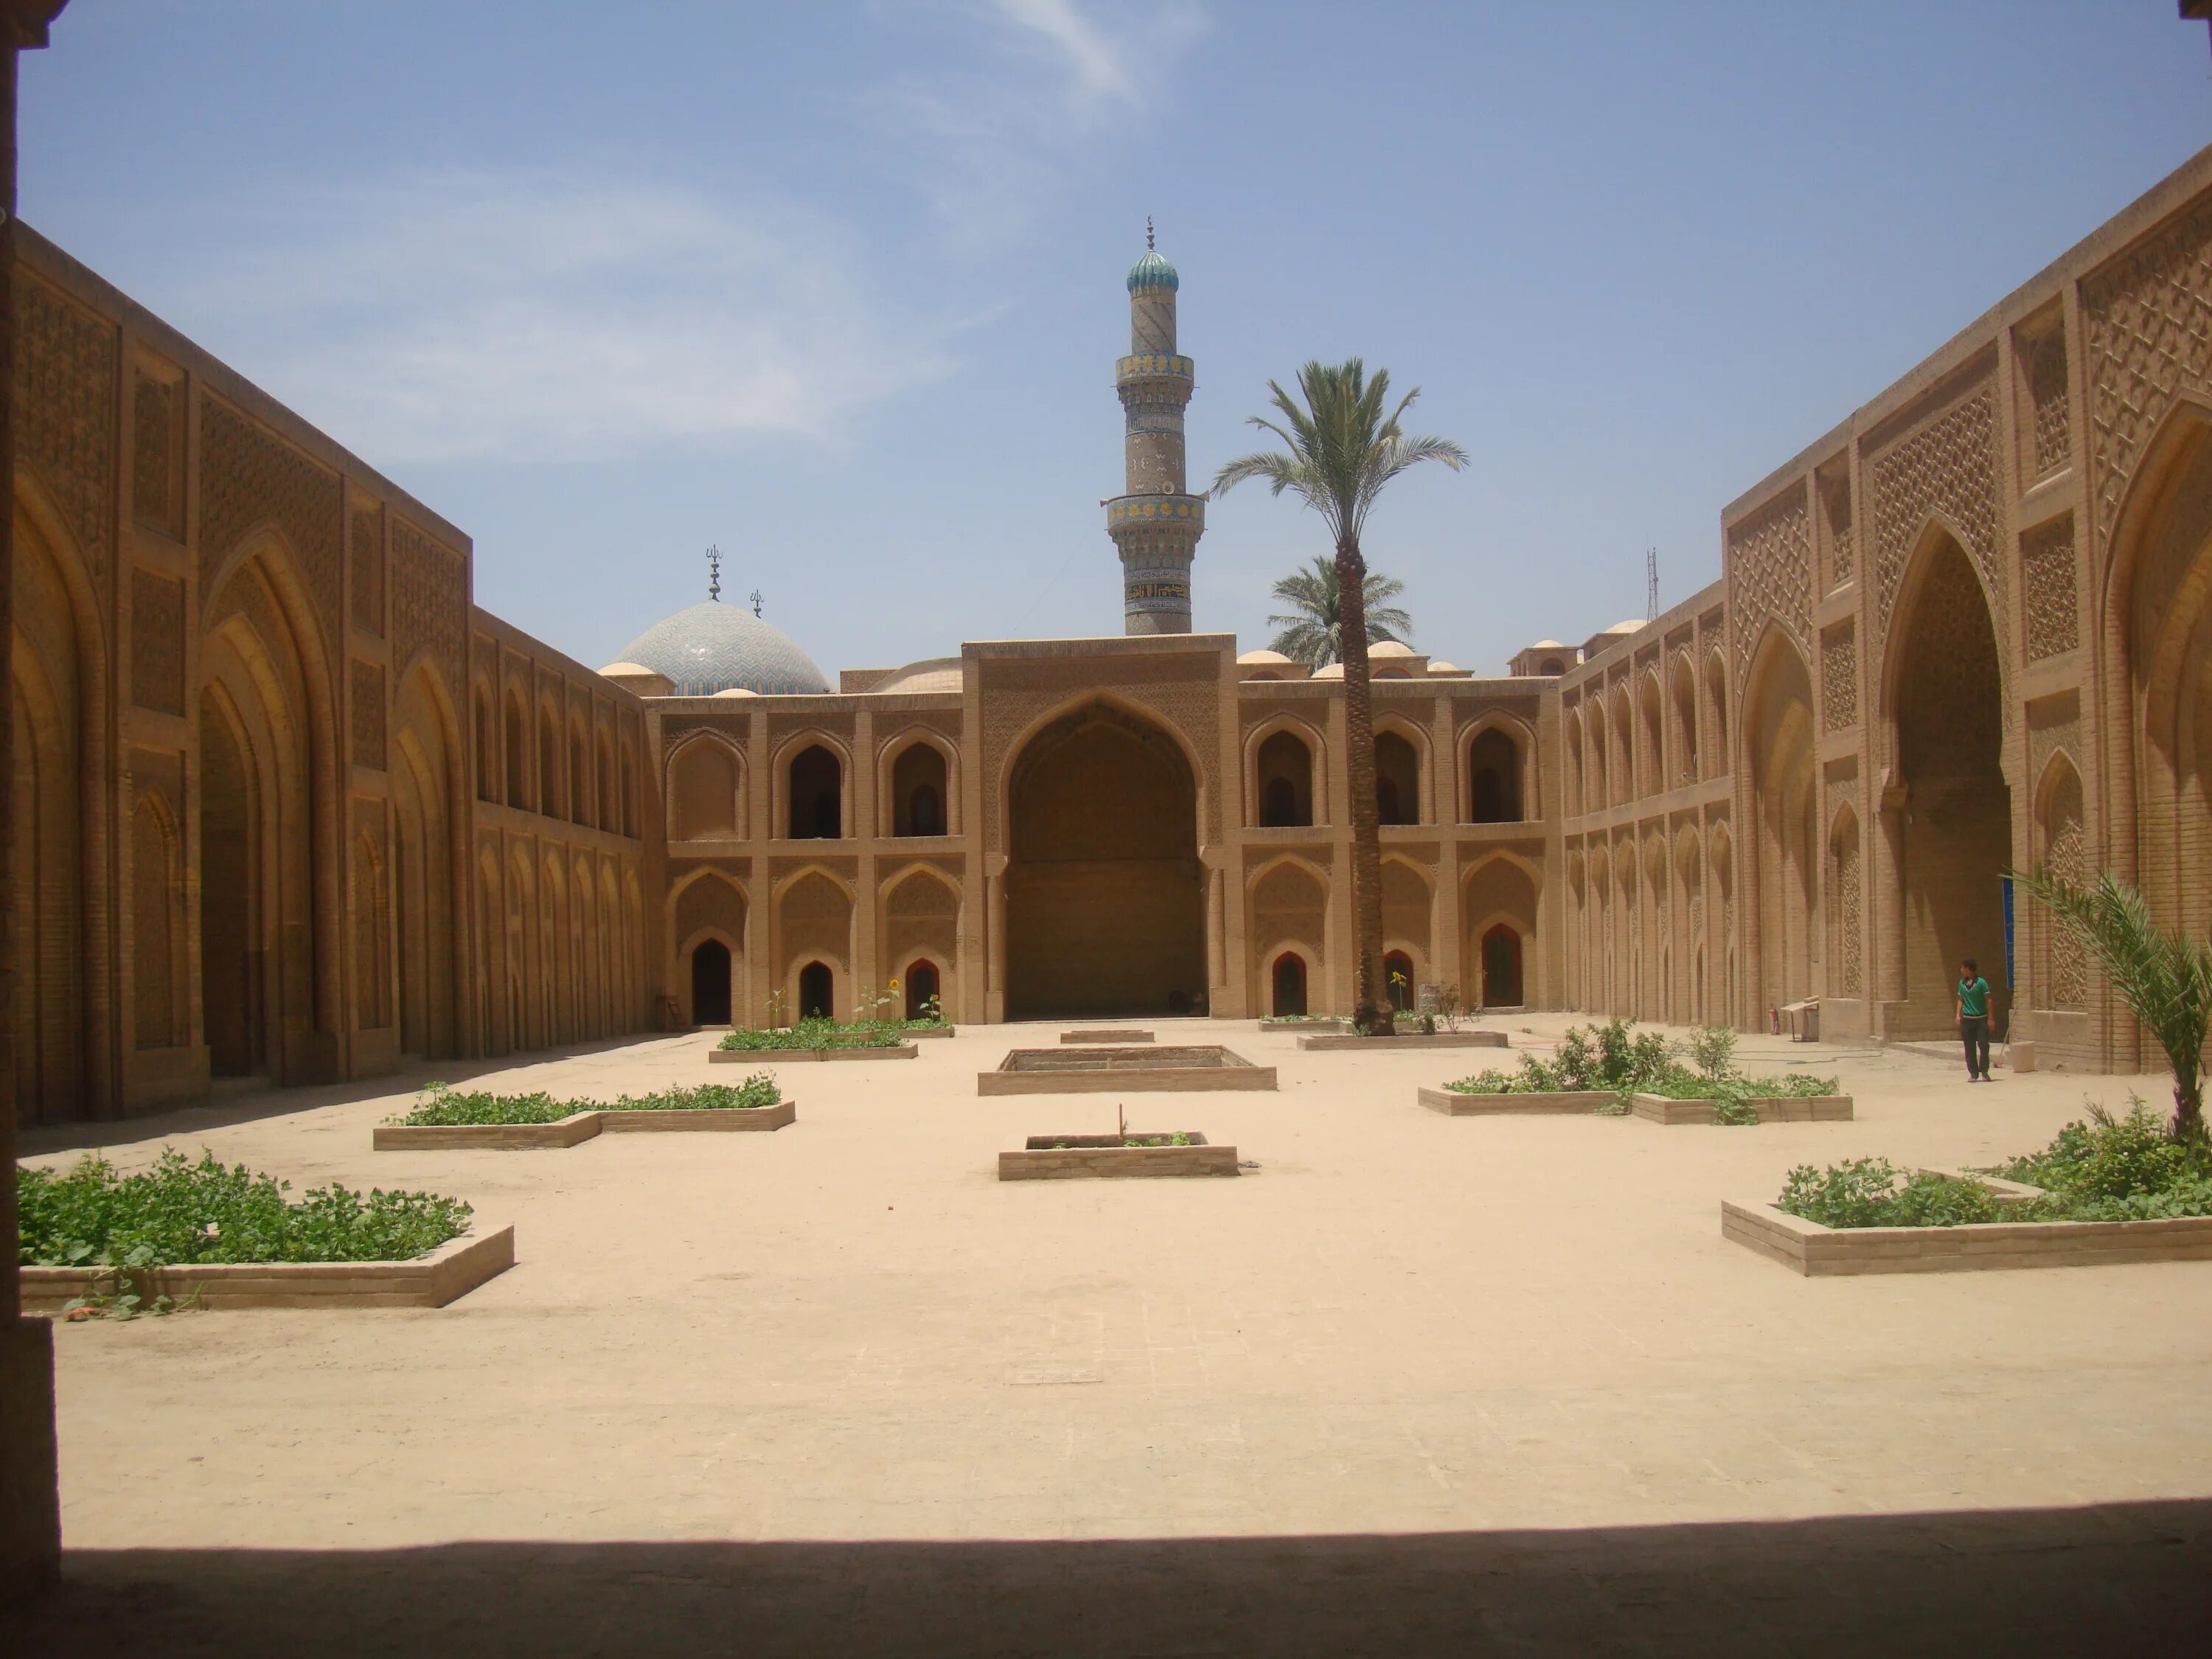 Город столица арабского халифата. Дворец Халифа в Багдаде. Дворец Аббасидов в Багдаде. Медресе Мустансирия в Багдаде.